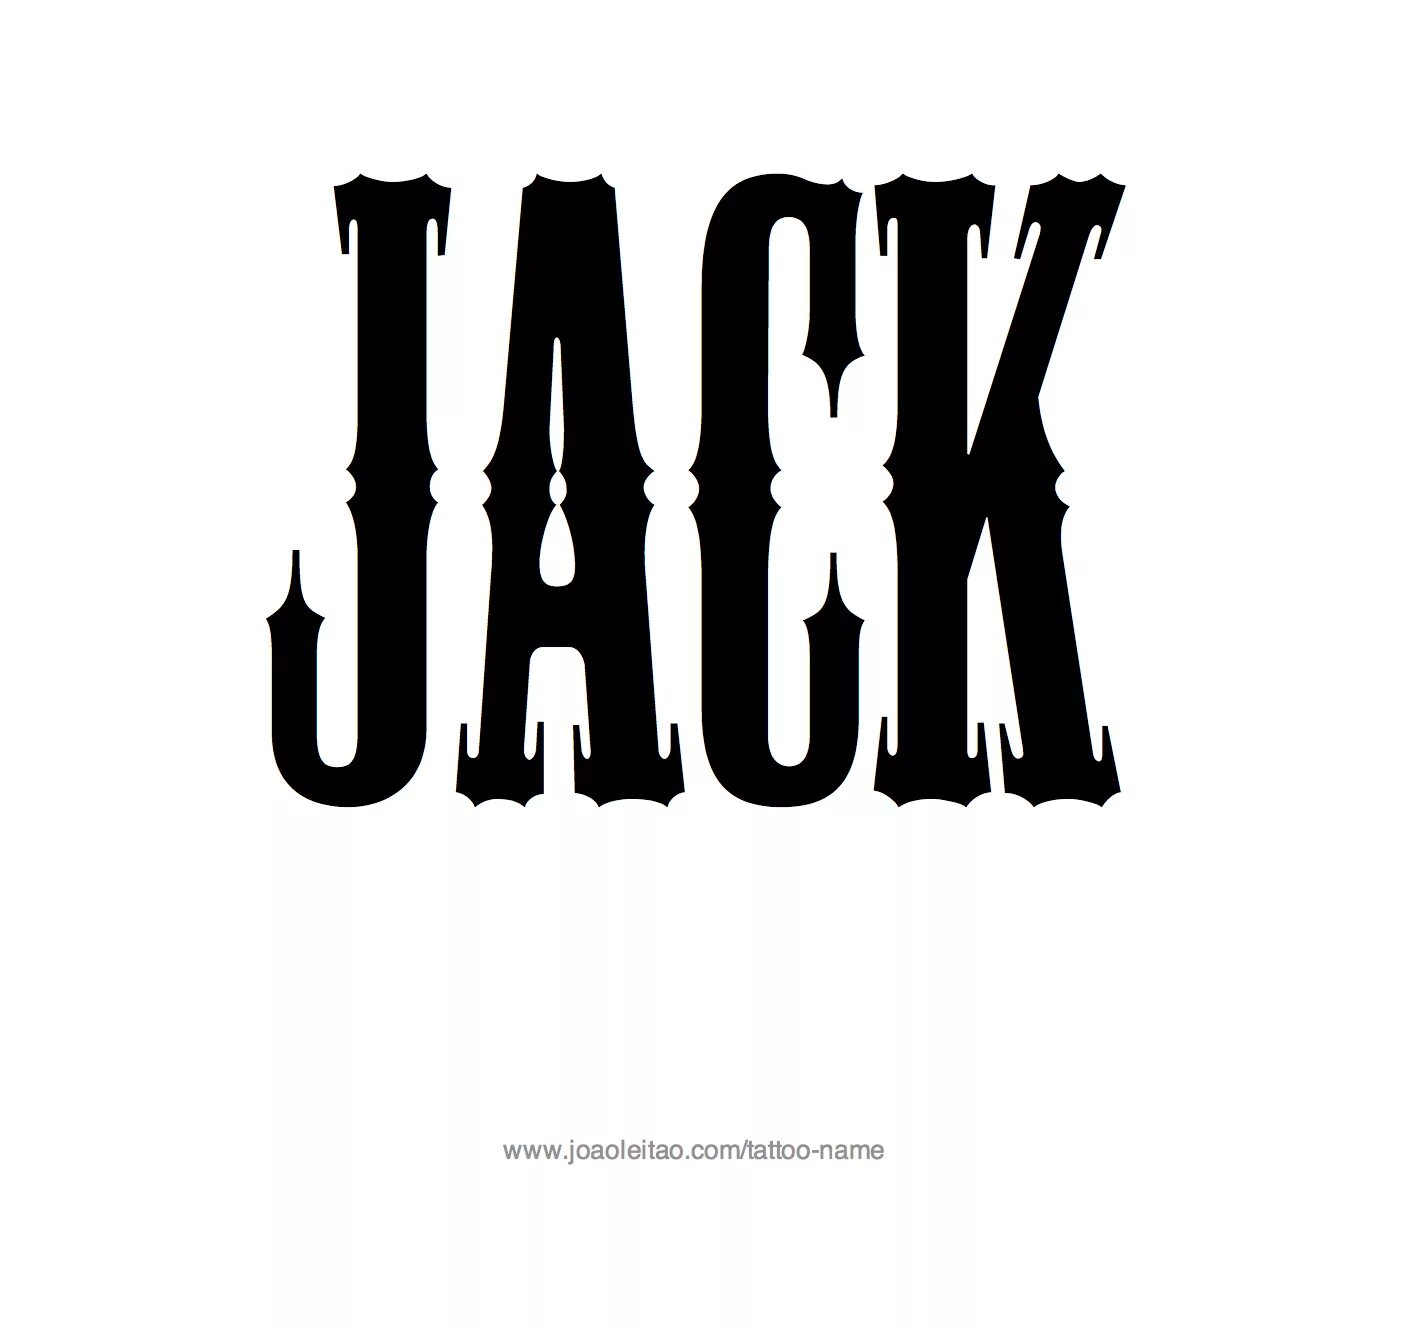 His name jack. Jack имя. Красивое написание имени Джек. Красивая буква Джек. Красиво написано Джек.